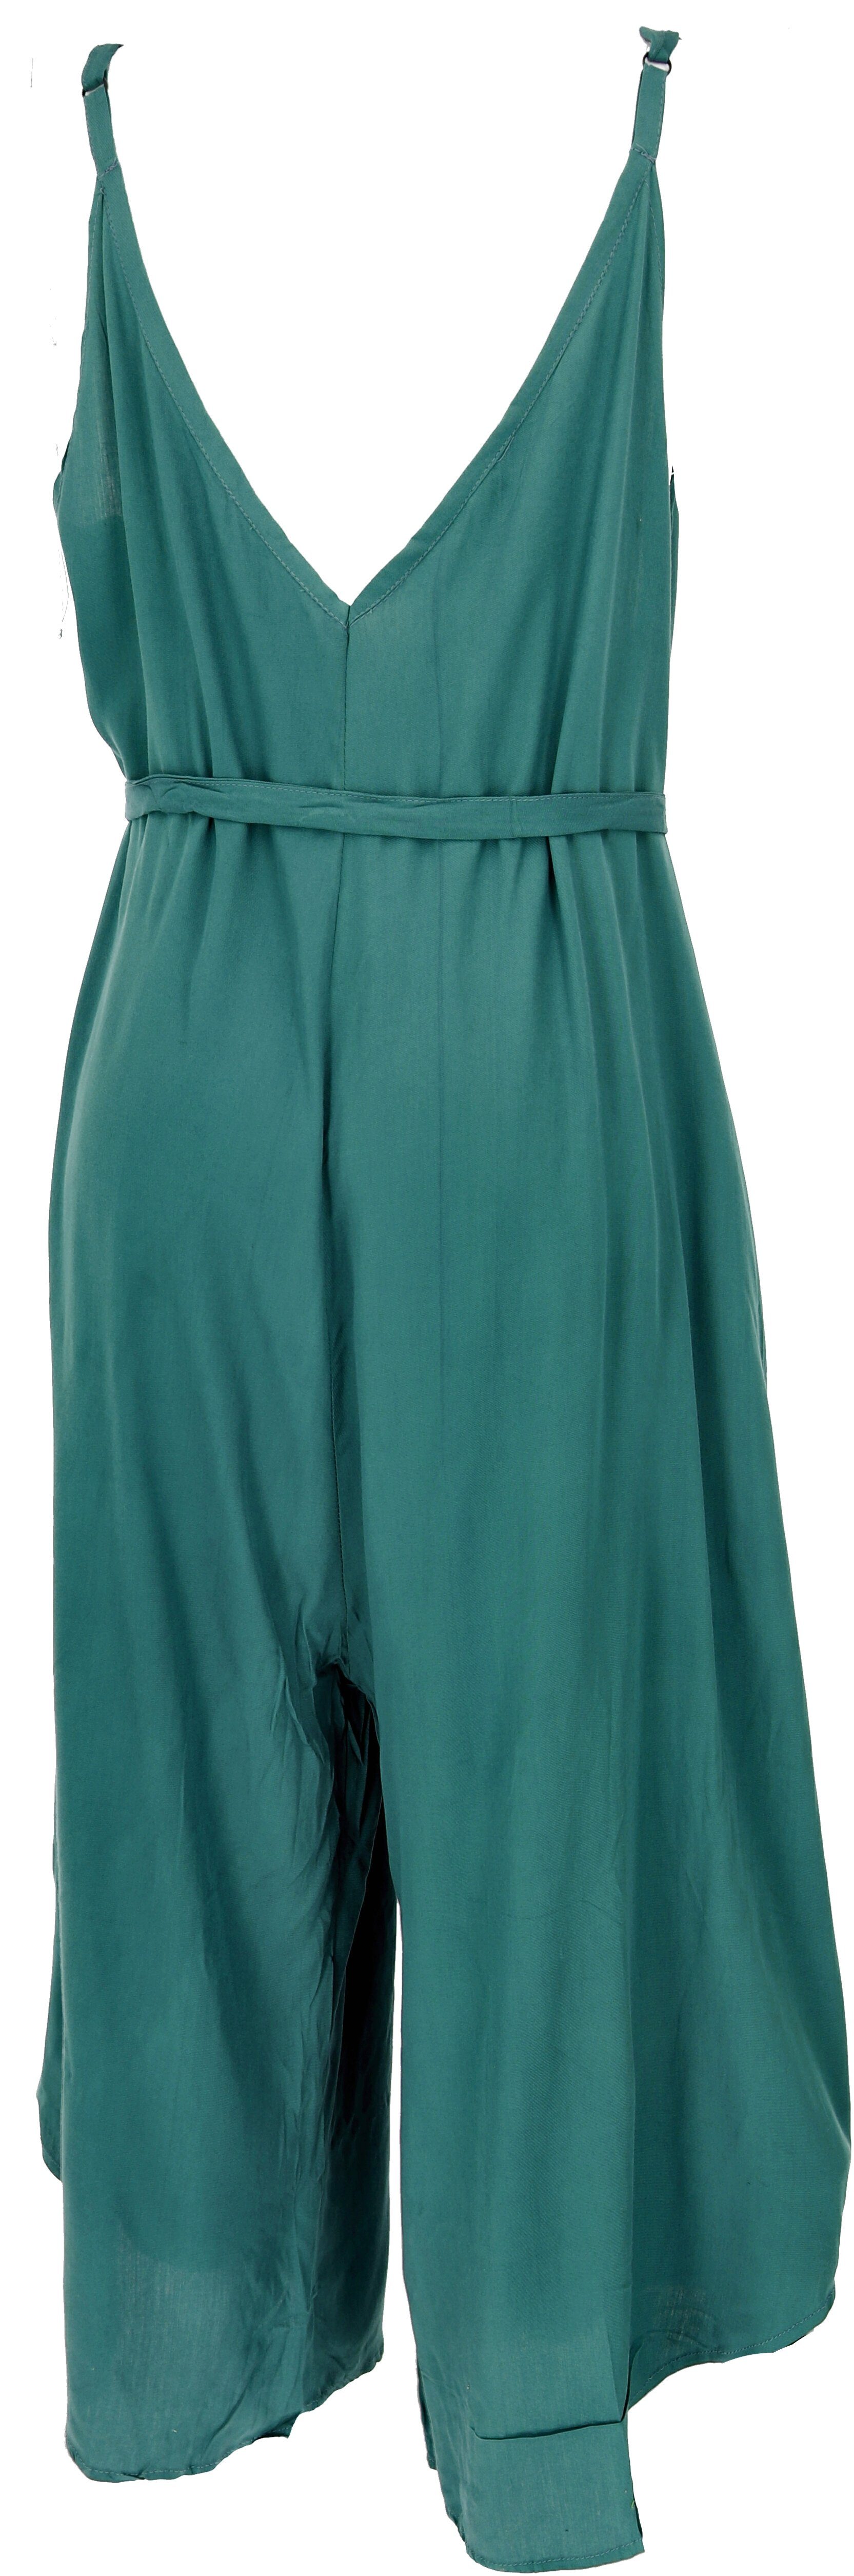 Guru-Shop Jumpsuit, Relaxhose alternative dunkelgrün Bekleidung Sommer Overall,.. Einfarbiger